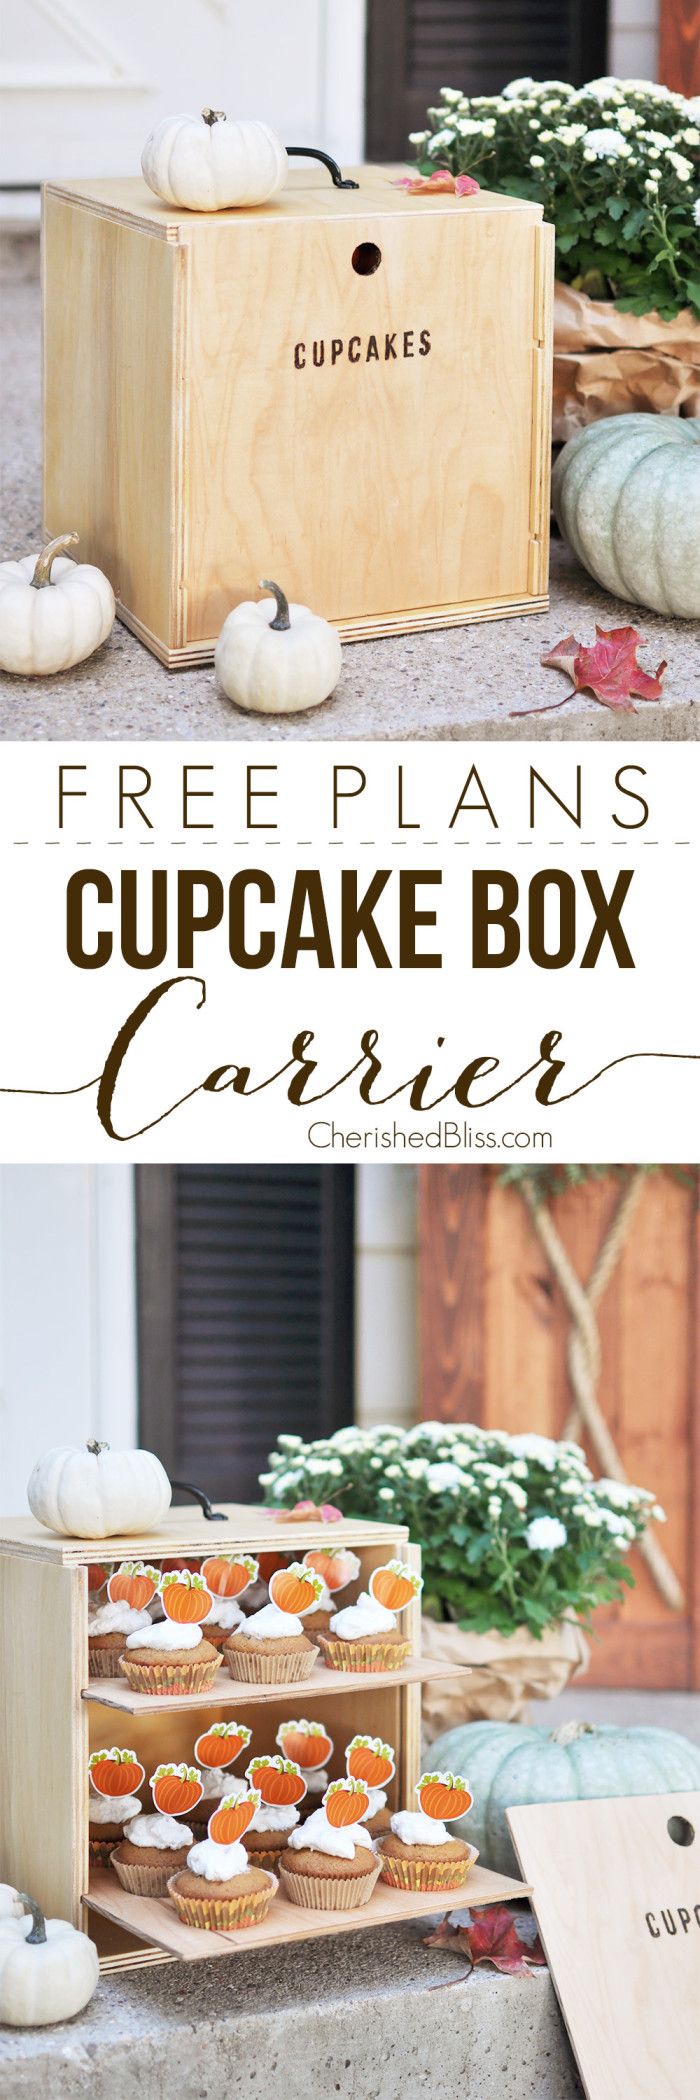 DIY Cupcake Box Carrier Tutorial